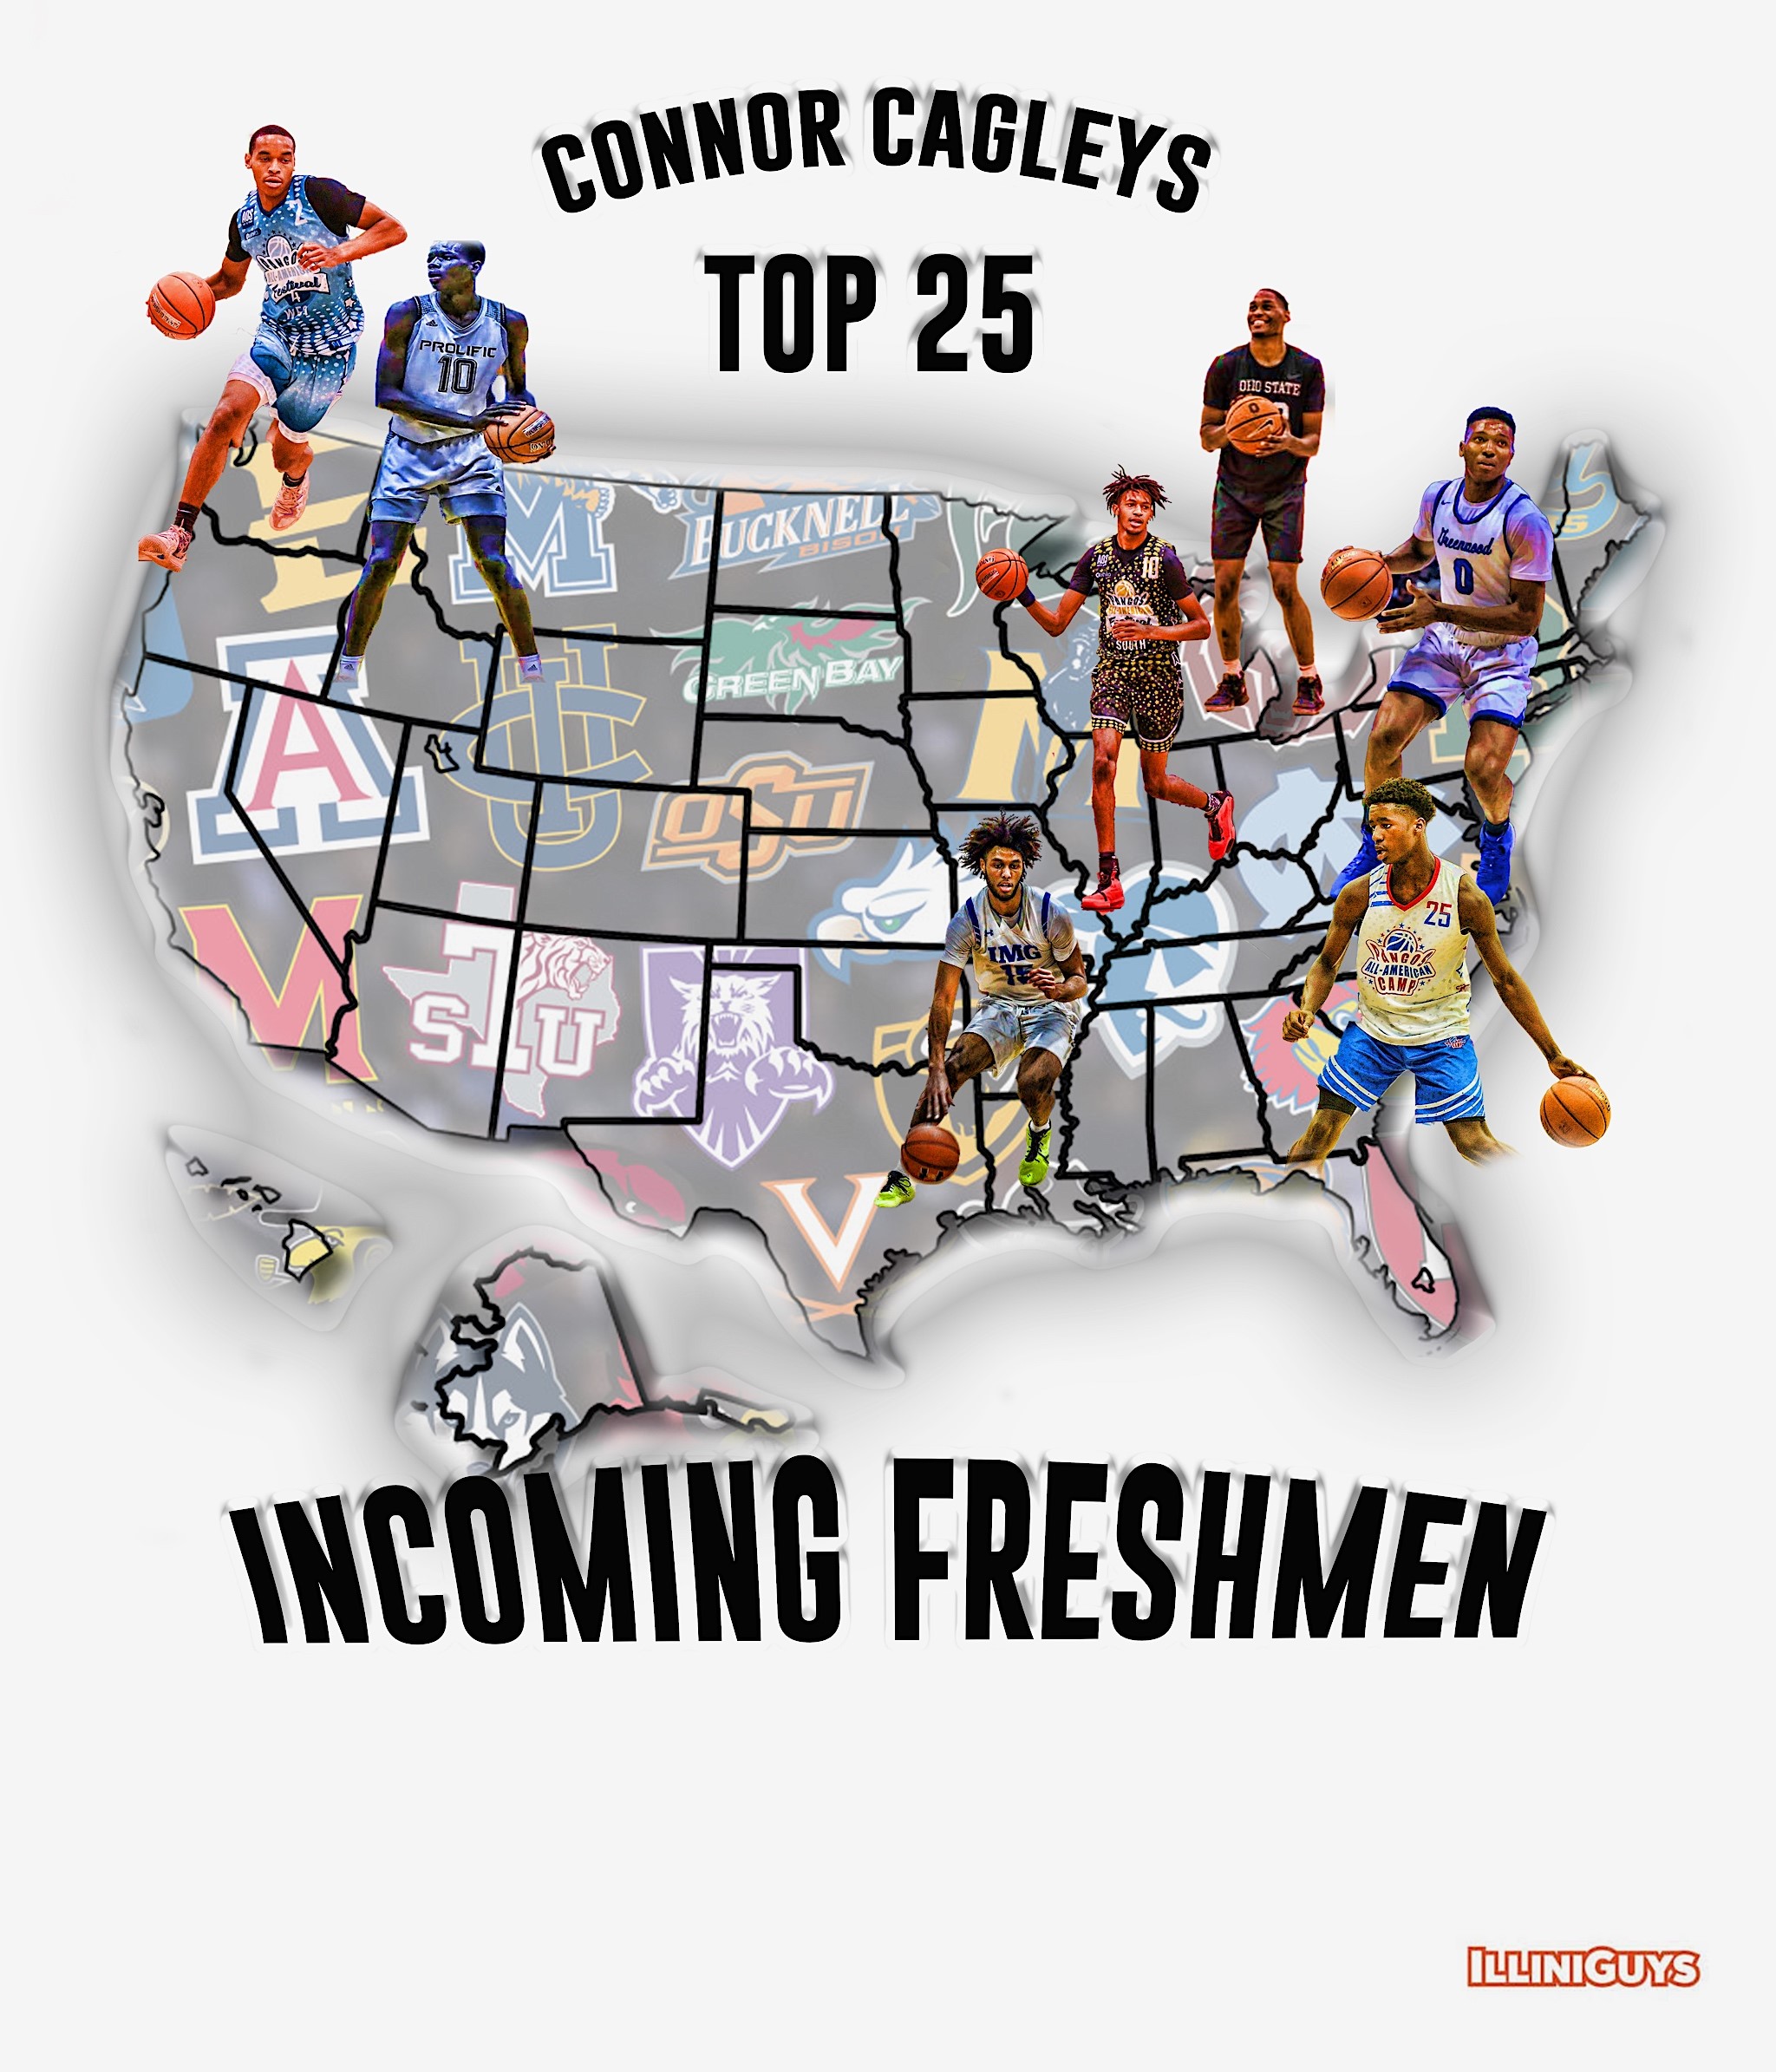 Top 25 Incoming Freshmen Basketball Players (The Top 5)